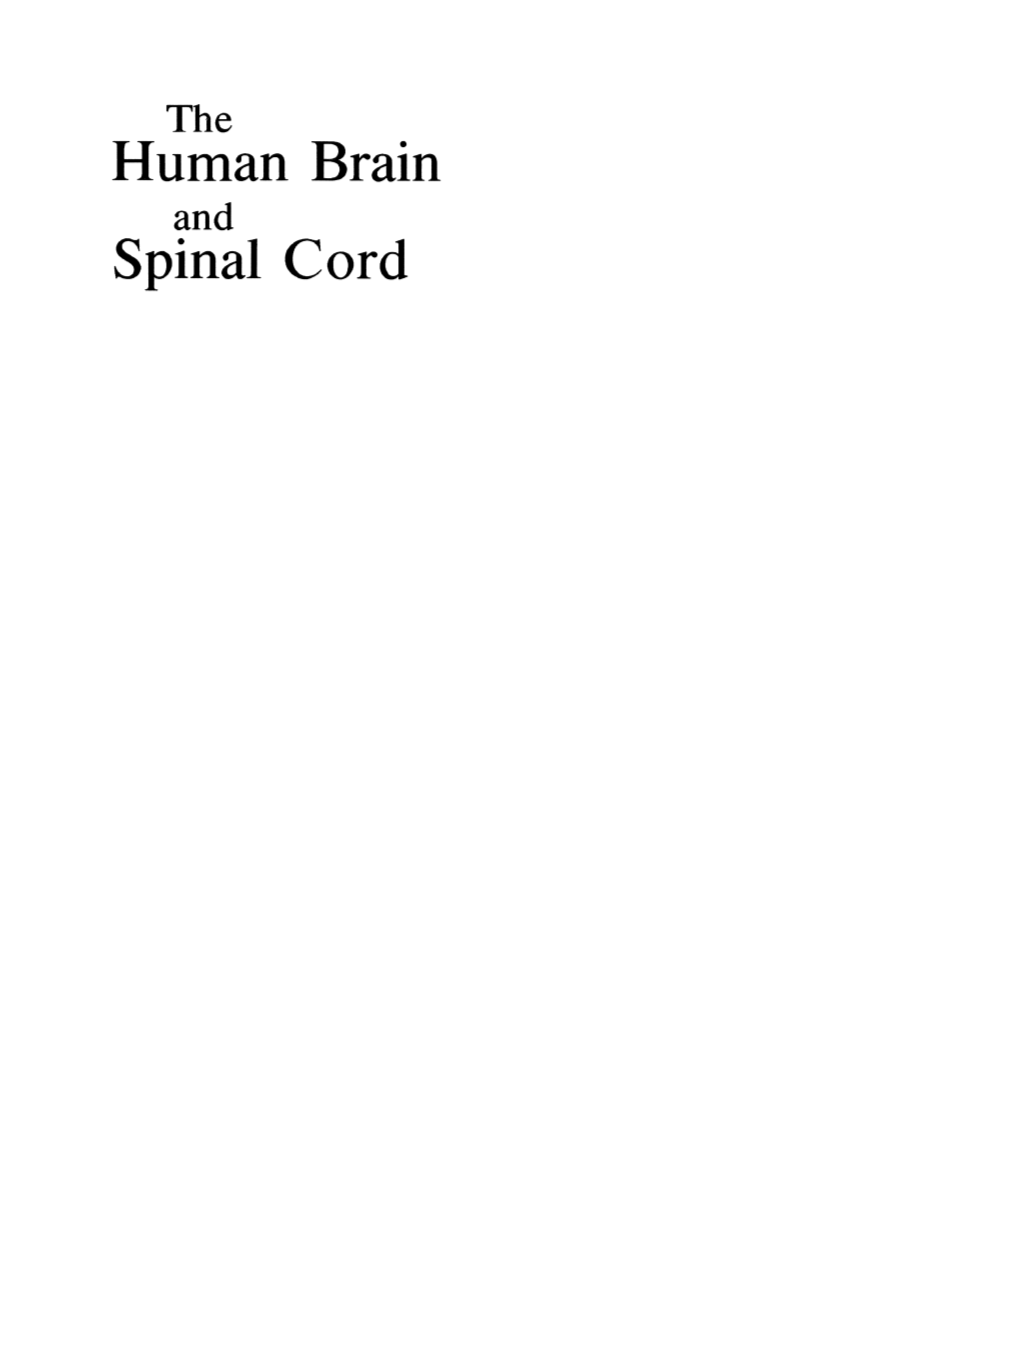 Human Brain Spinal Cord